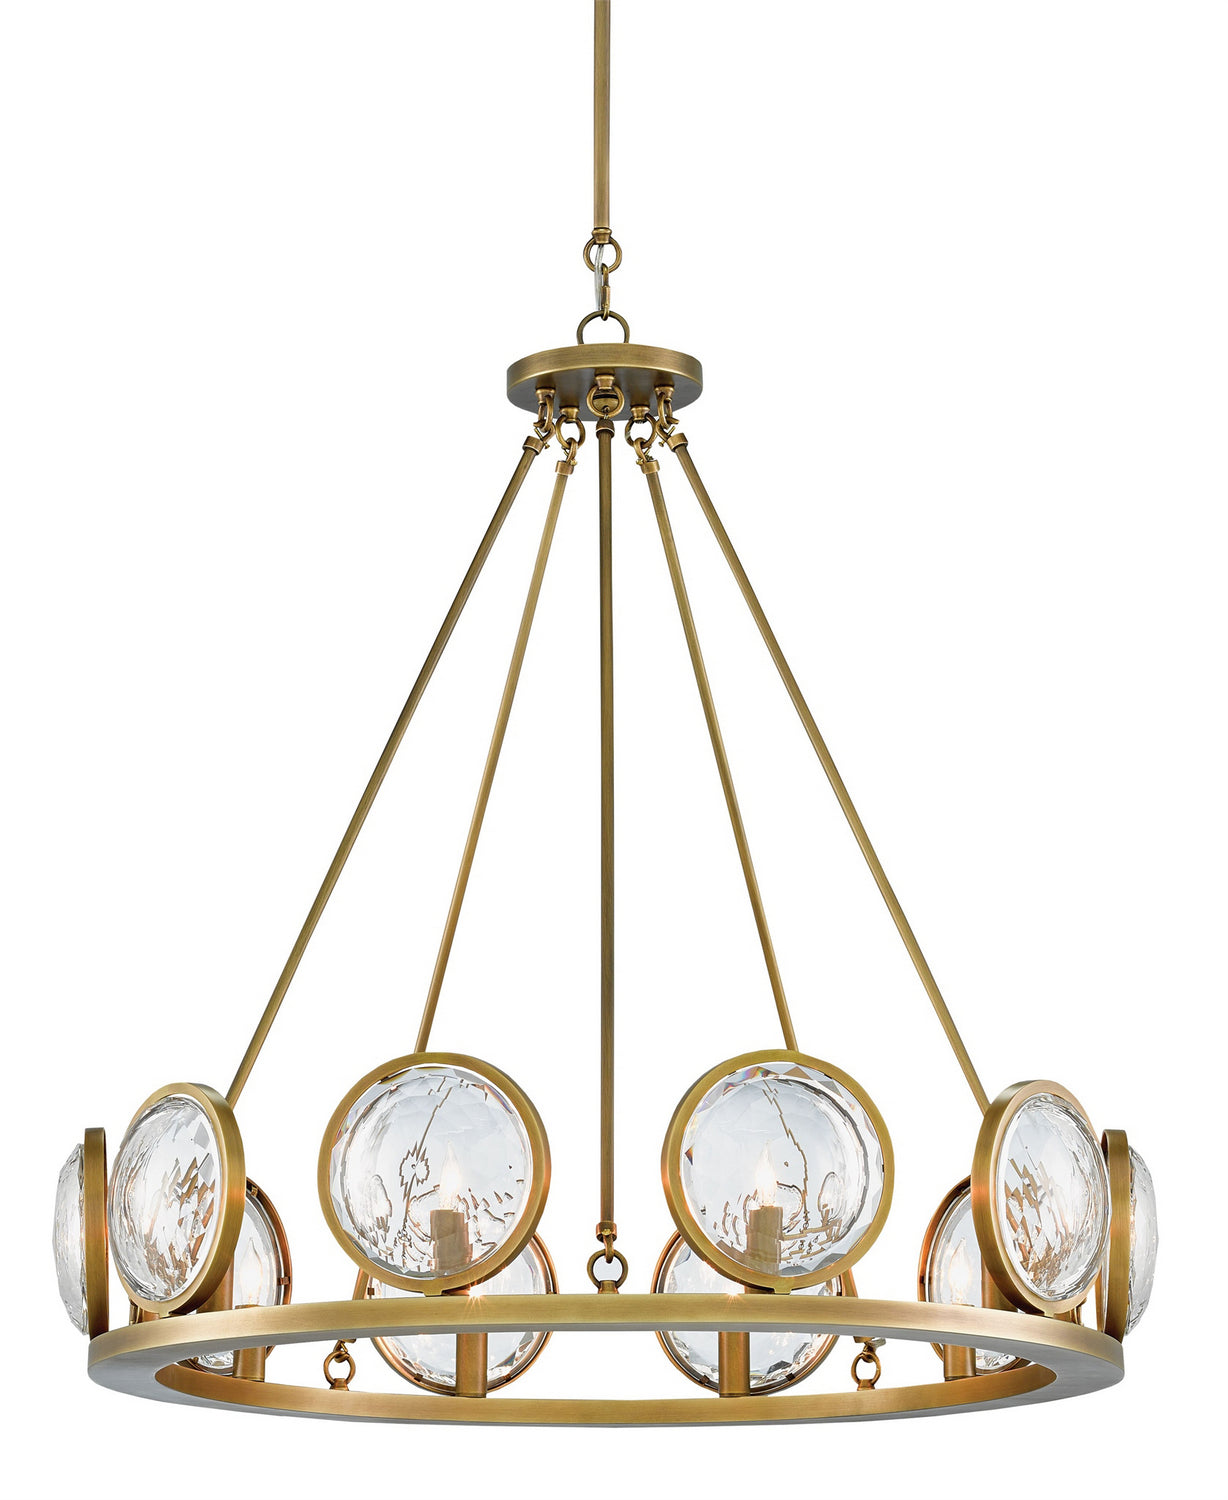 Ten Light Chandelier from the Marjorie Skouras collection in Antique Brass finish